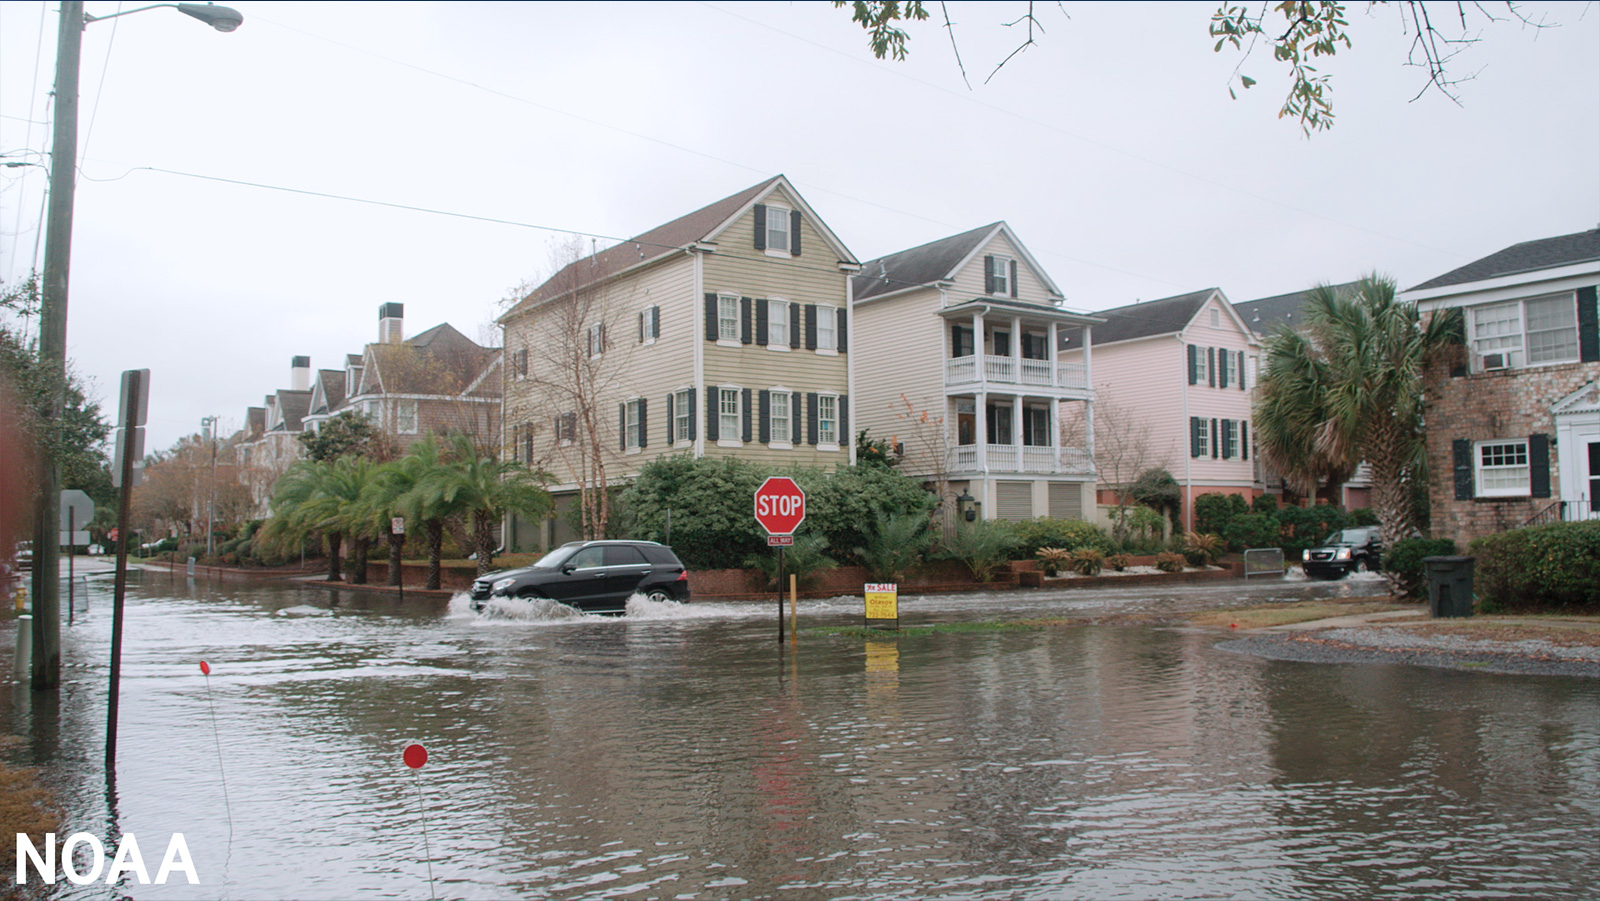 Severe flooding in a neighborhood. Photo Credit: NOAA